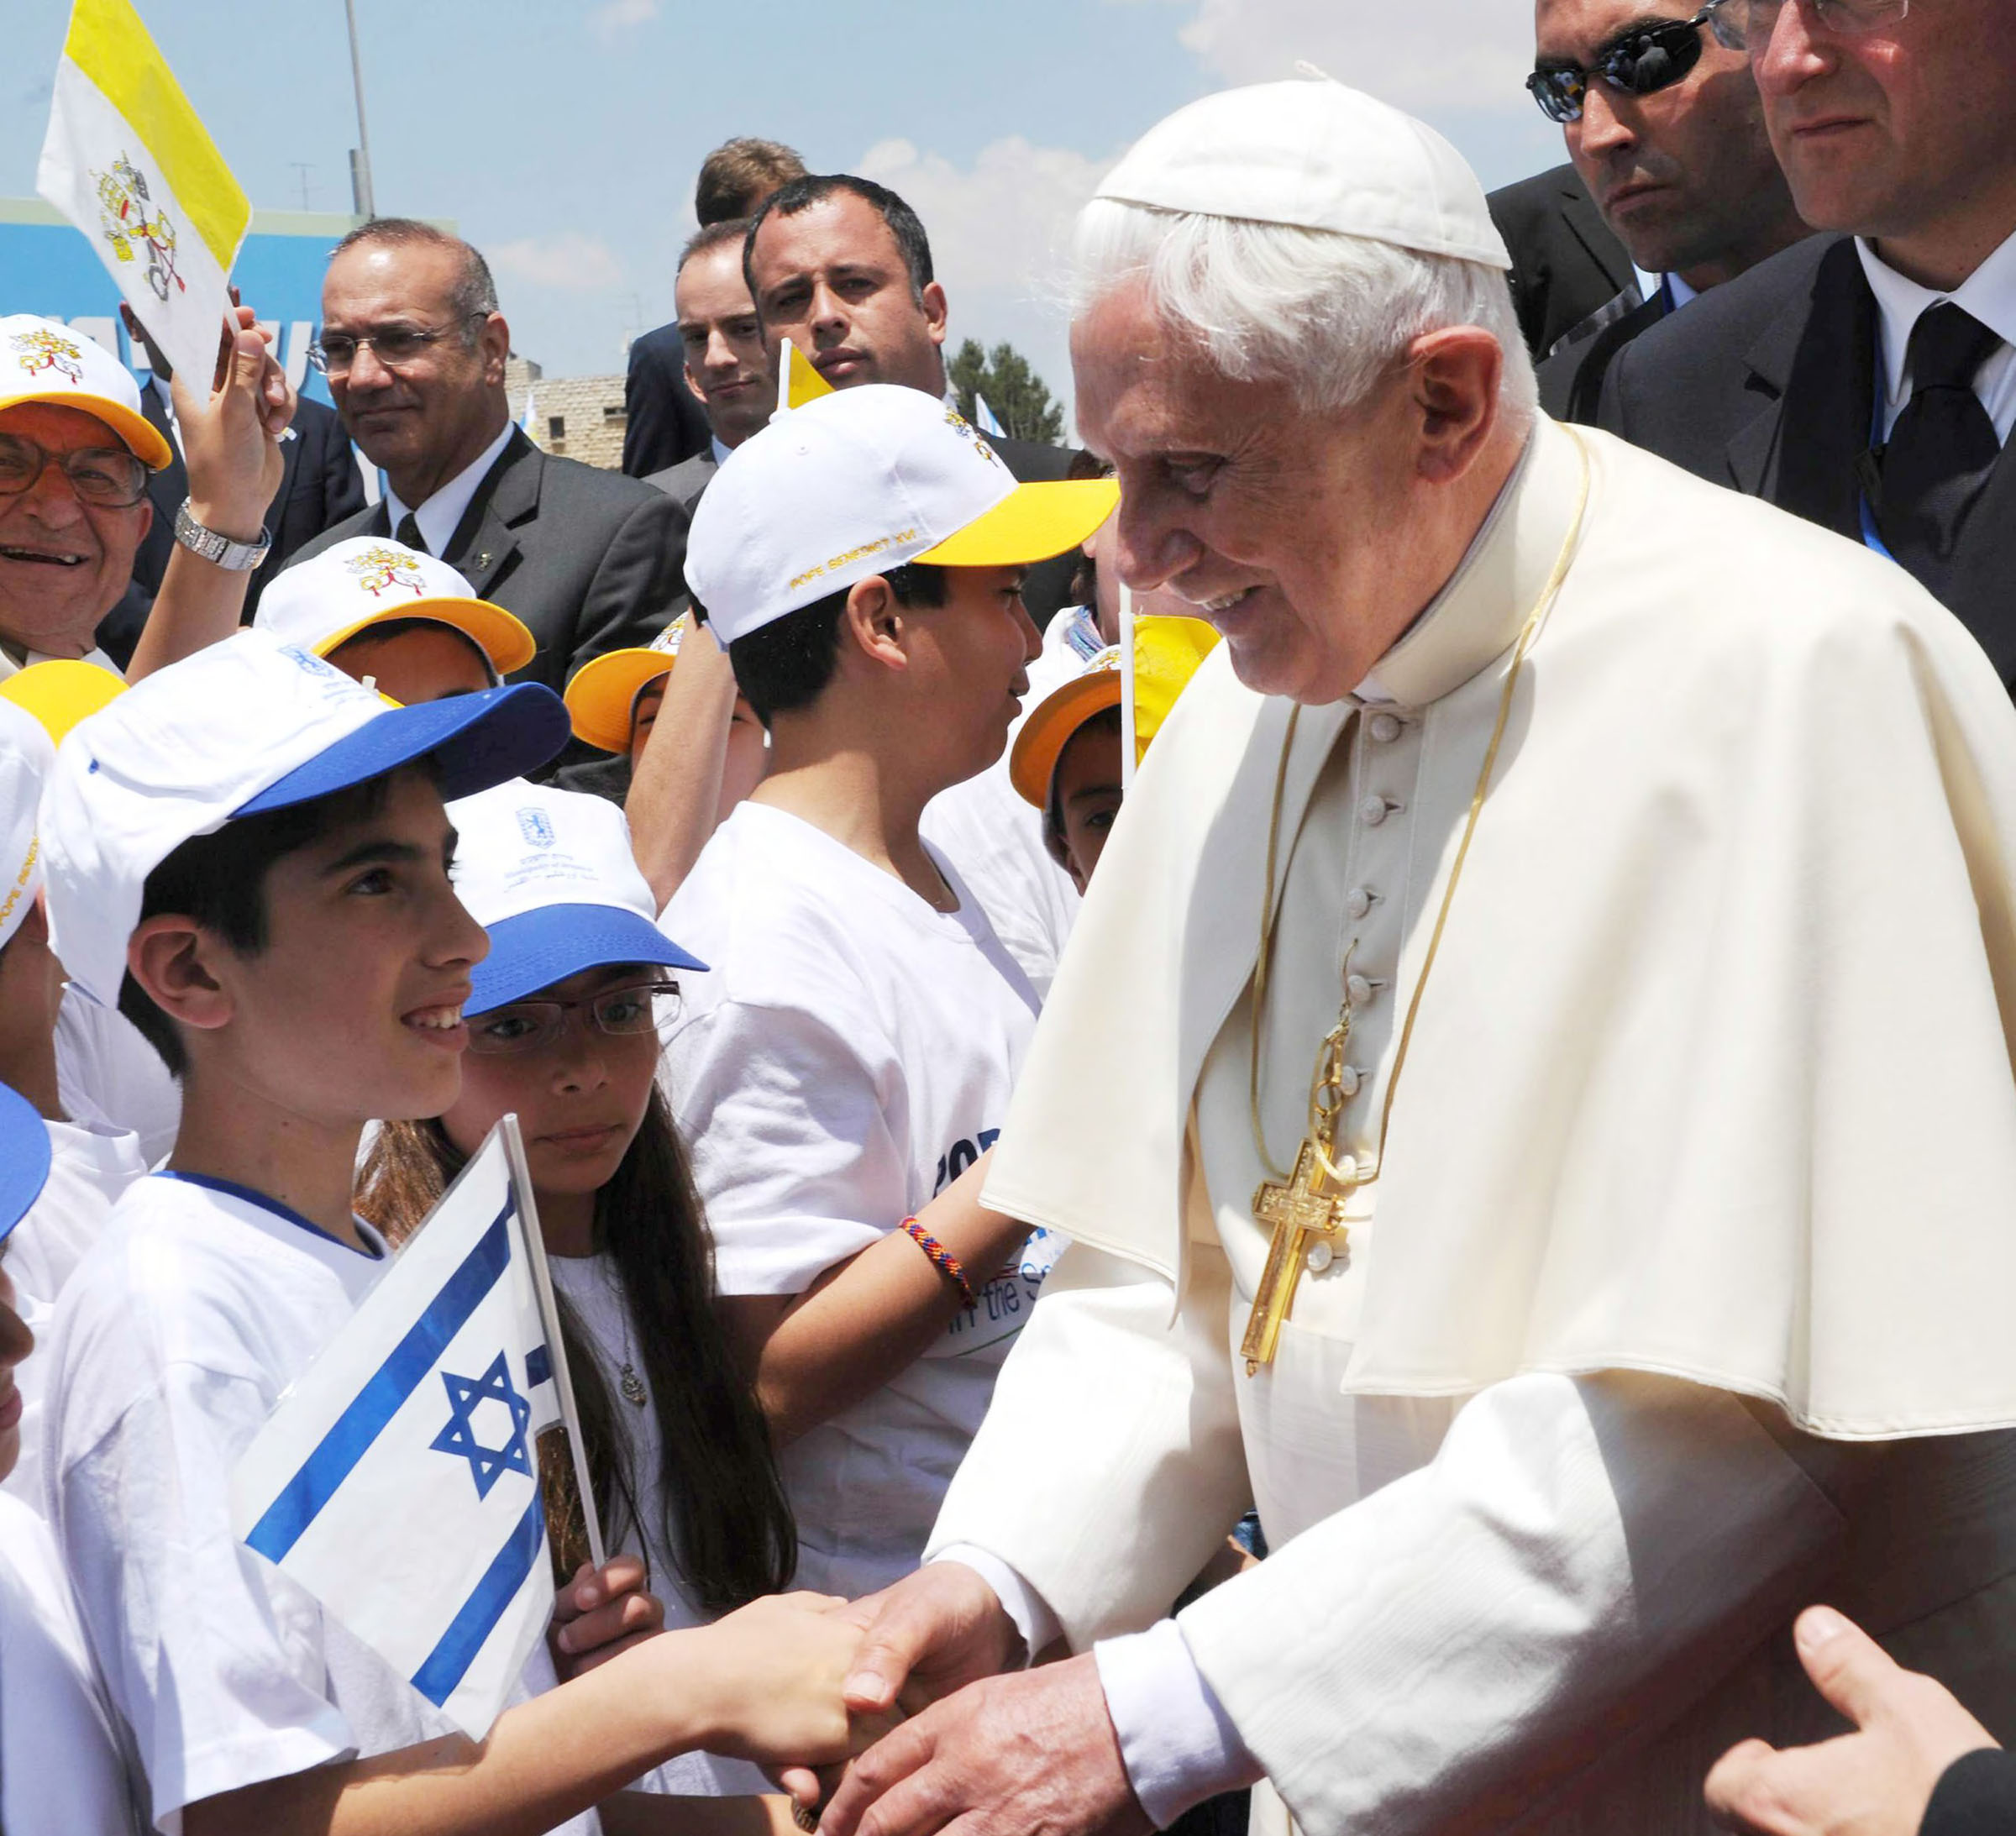 Pope Emeritus Benedict XVI greets children during a visit to Israel in 2009